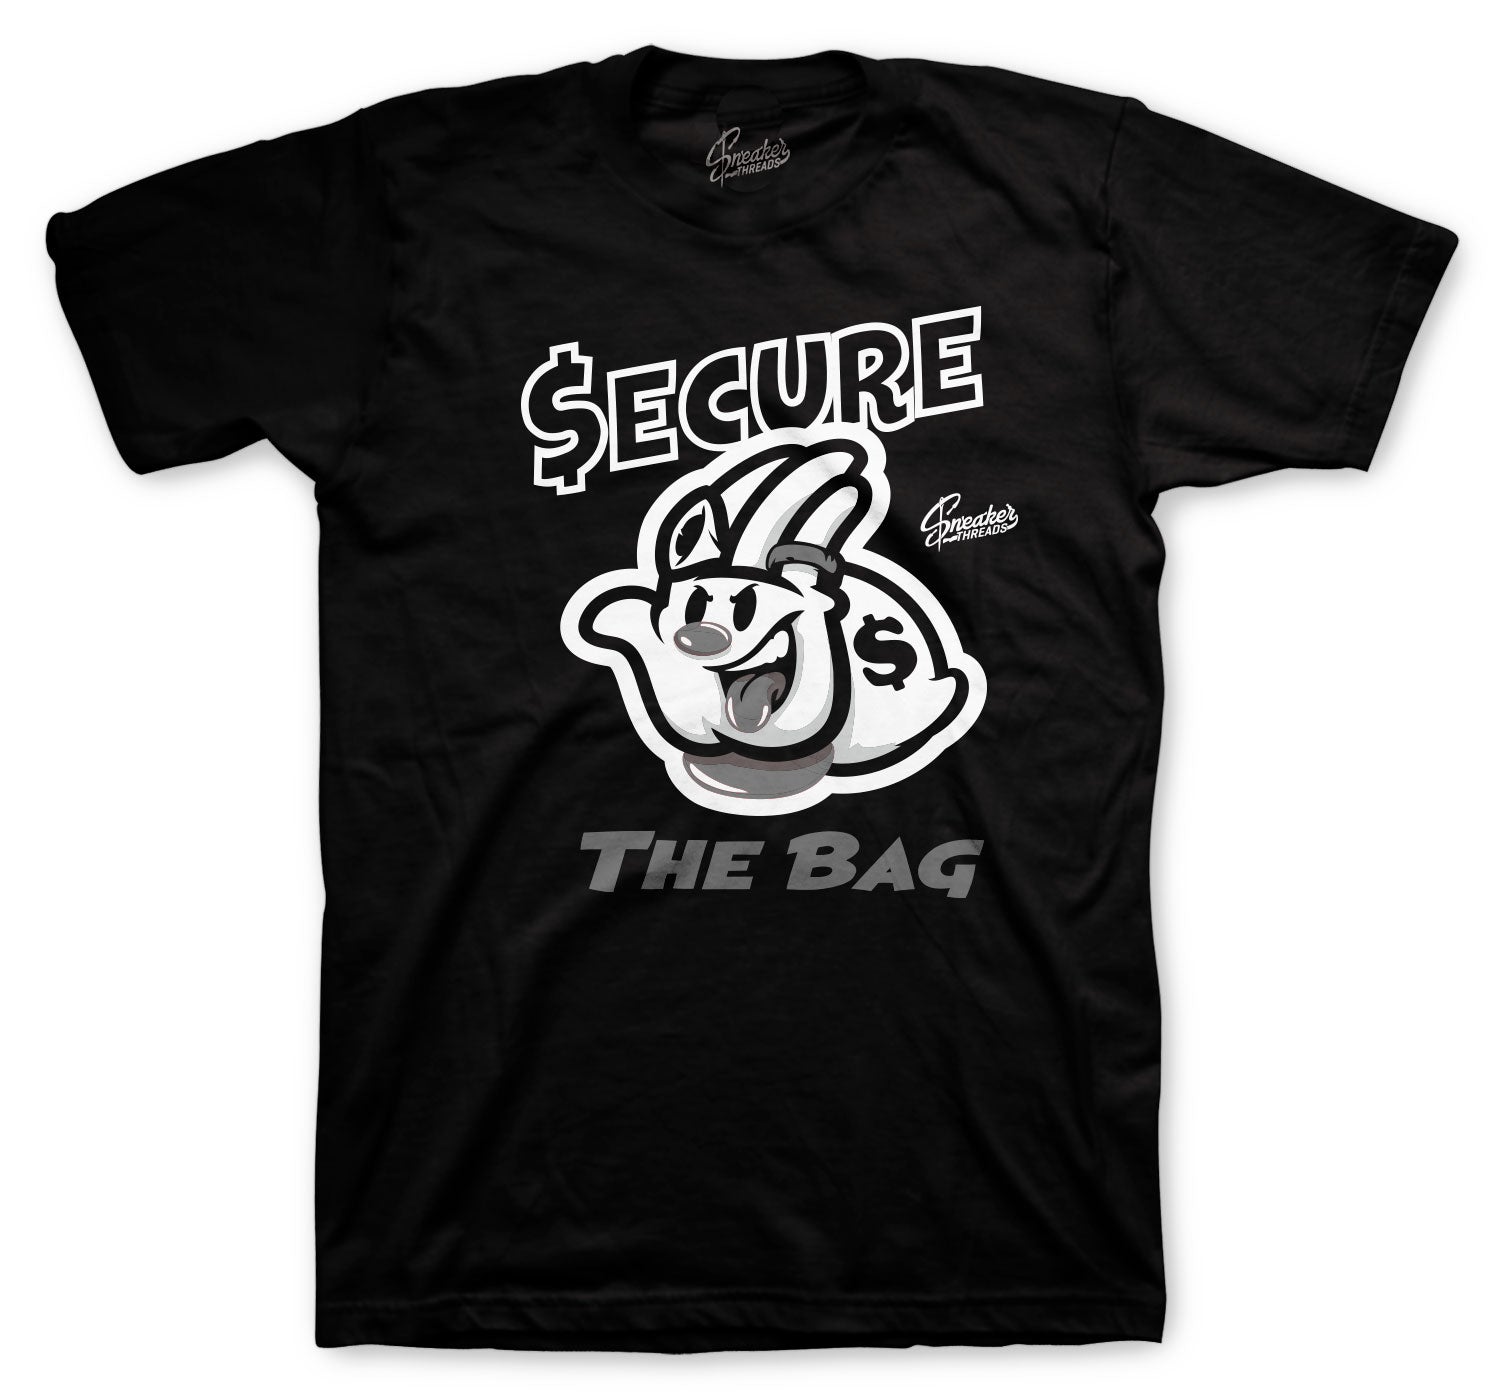 Foamposite Anthracite Shirt - Secure Bag - Black